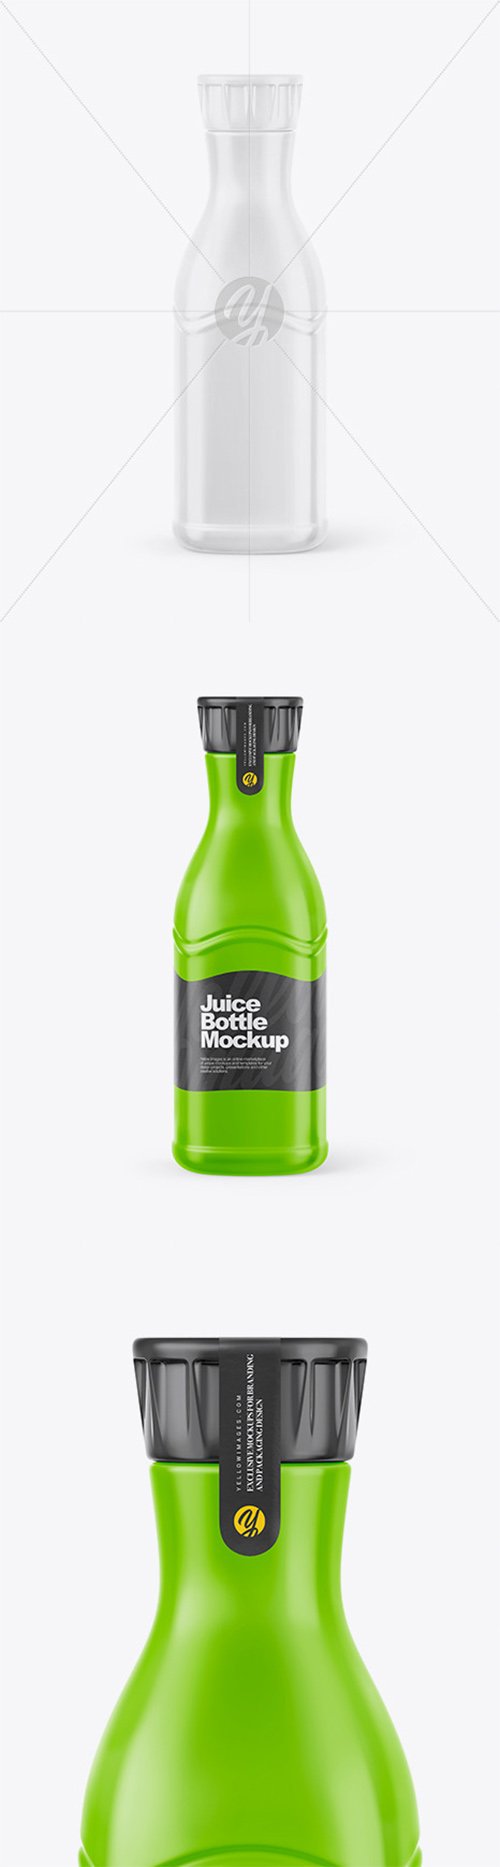 Juice Bottle Mockup - Front View 59024 TIF